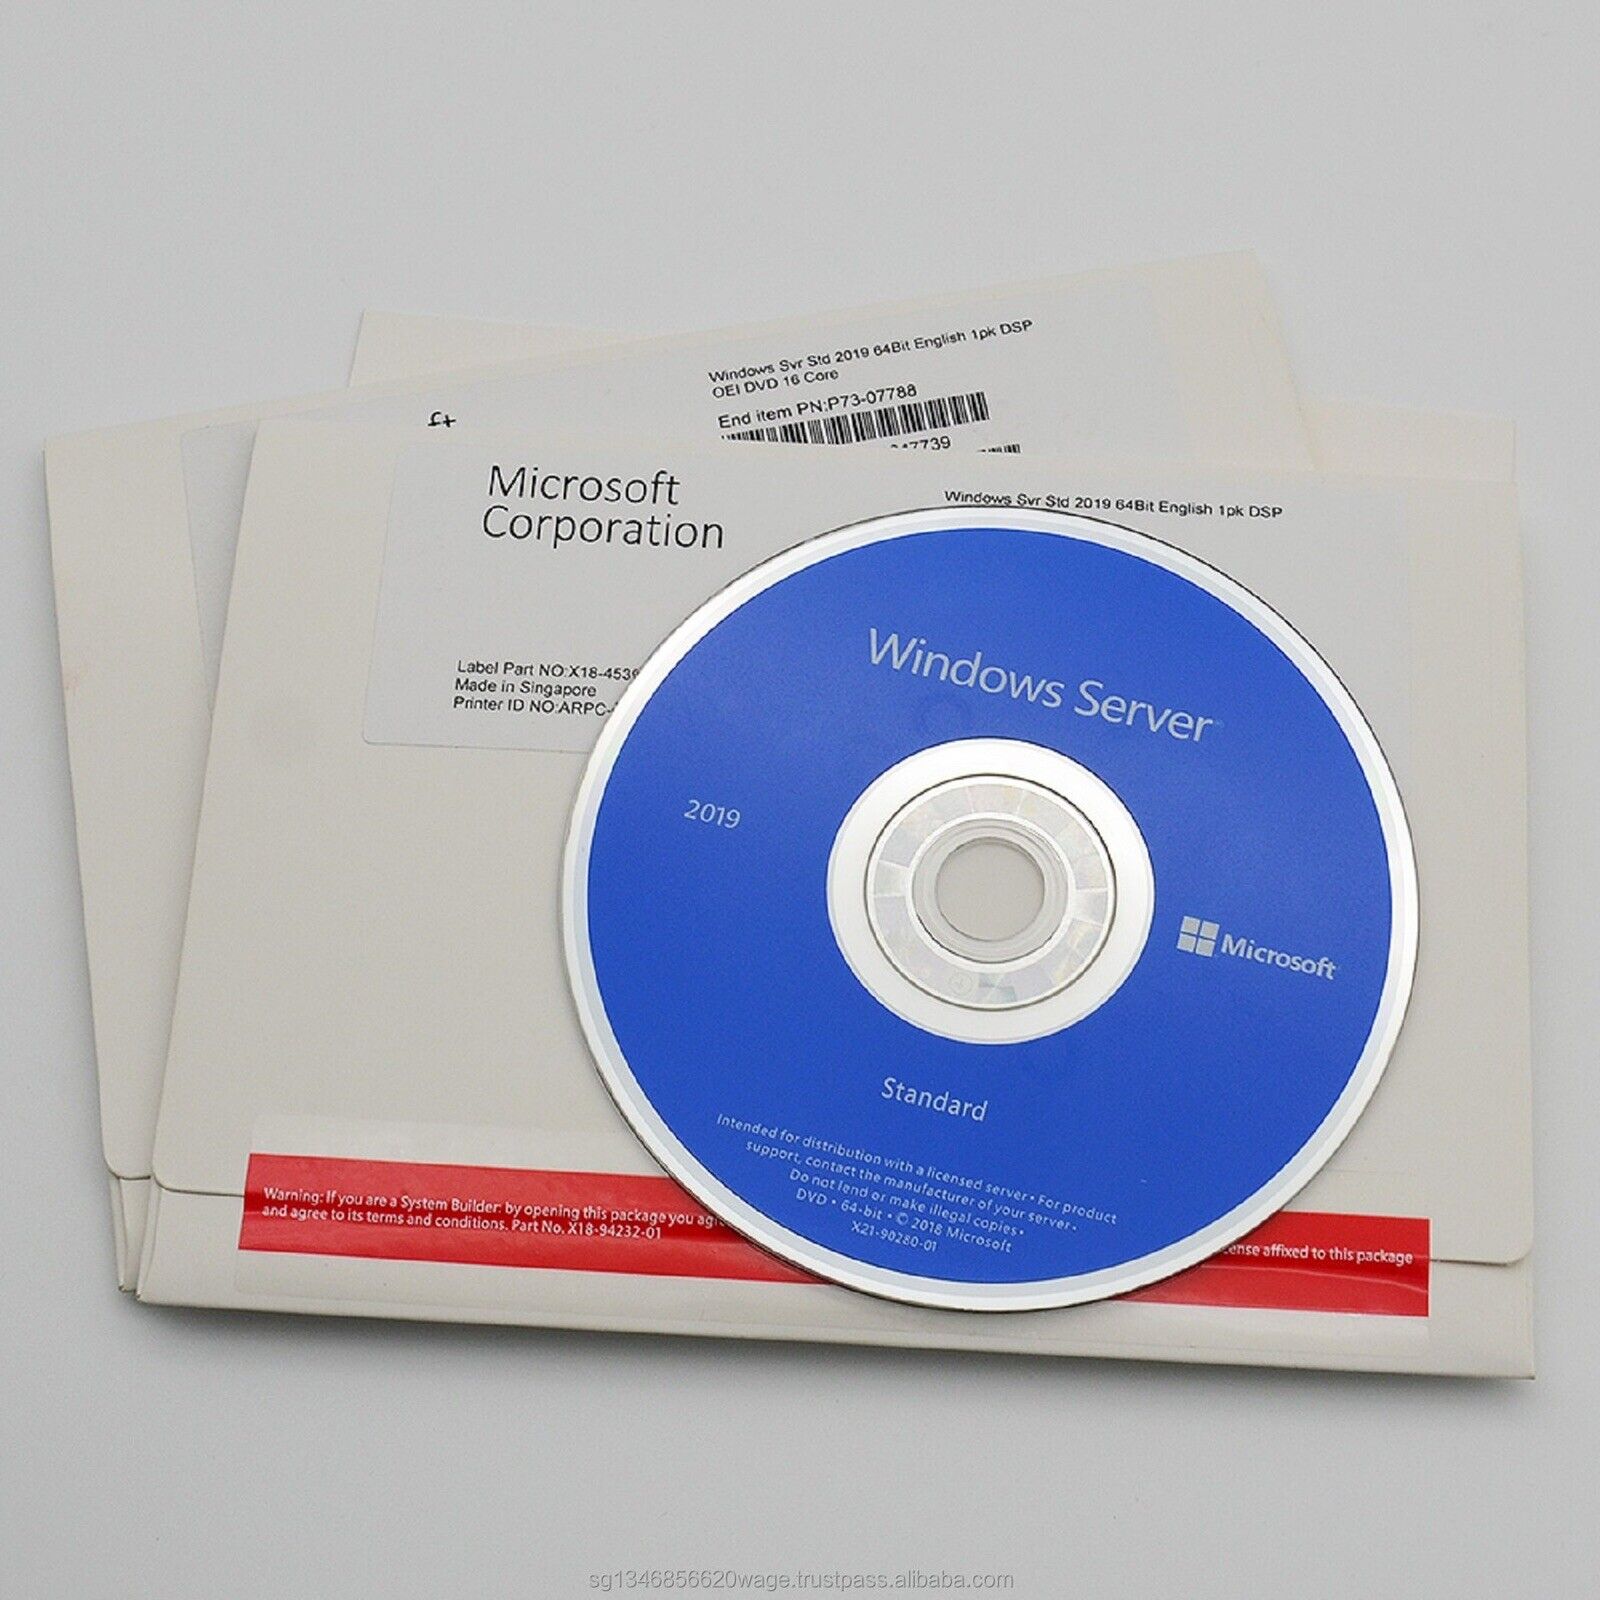 New Microsoft Windows Server 2019 Standard - New Sealed DVD Box